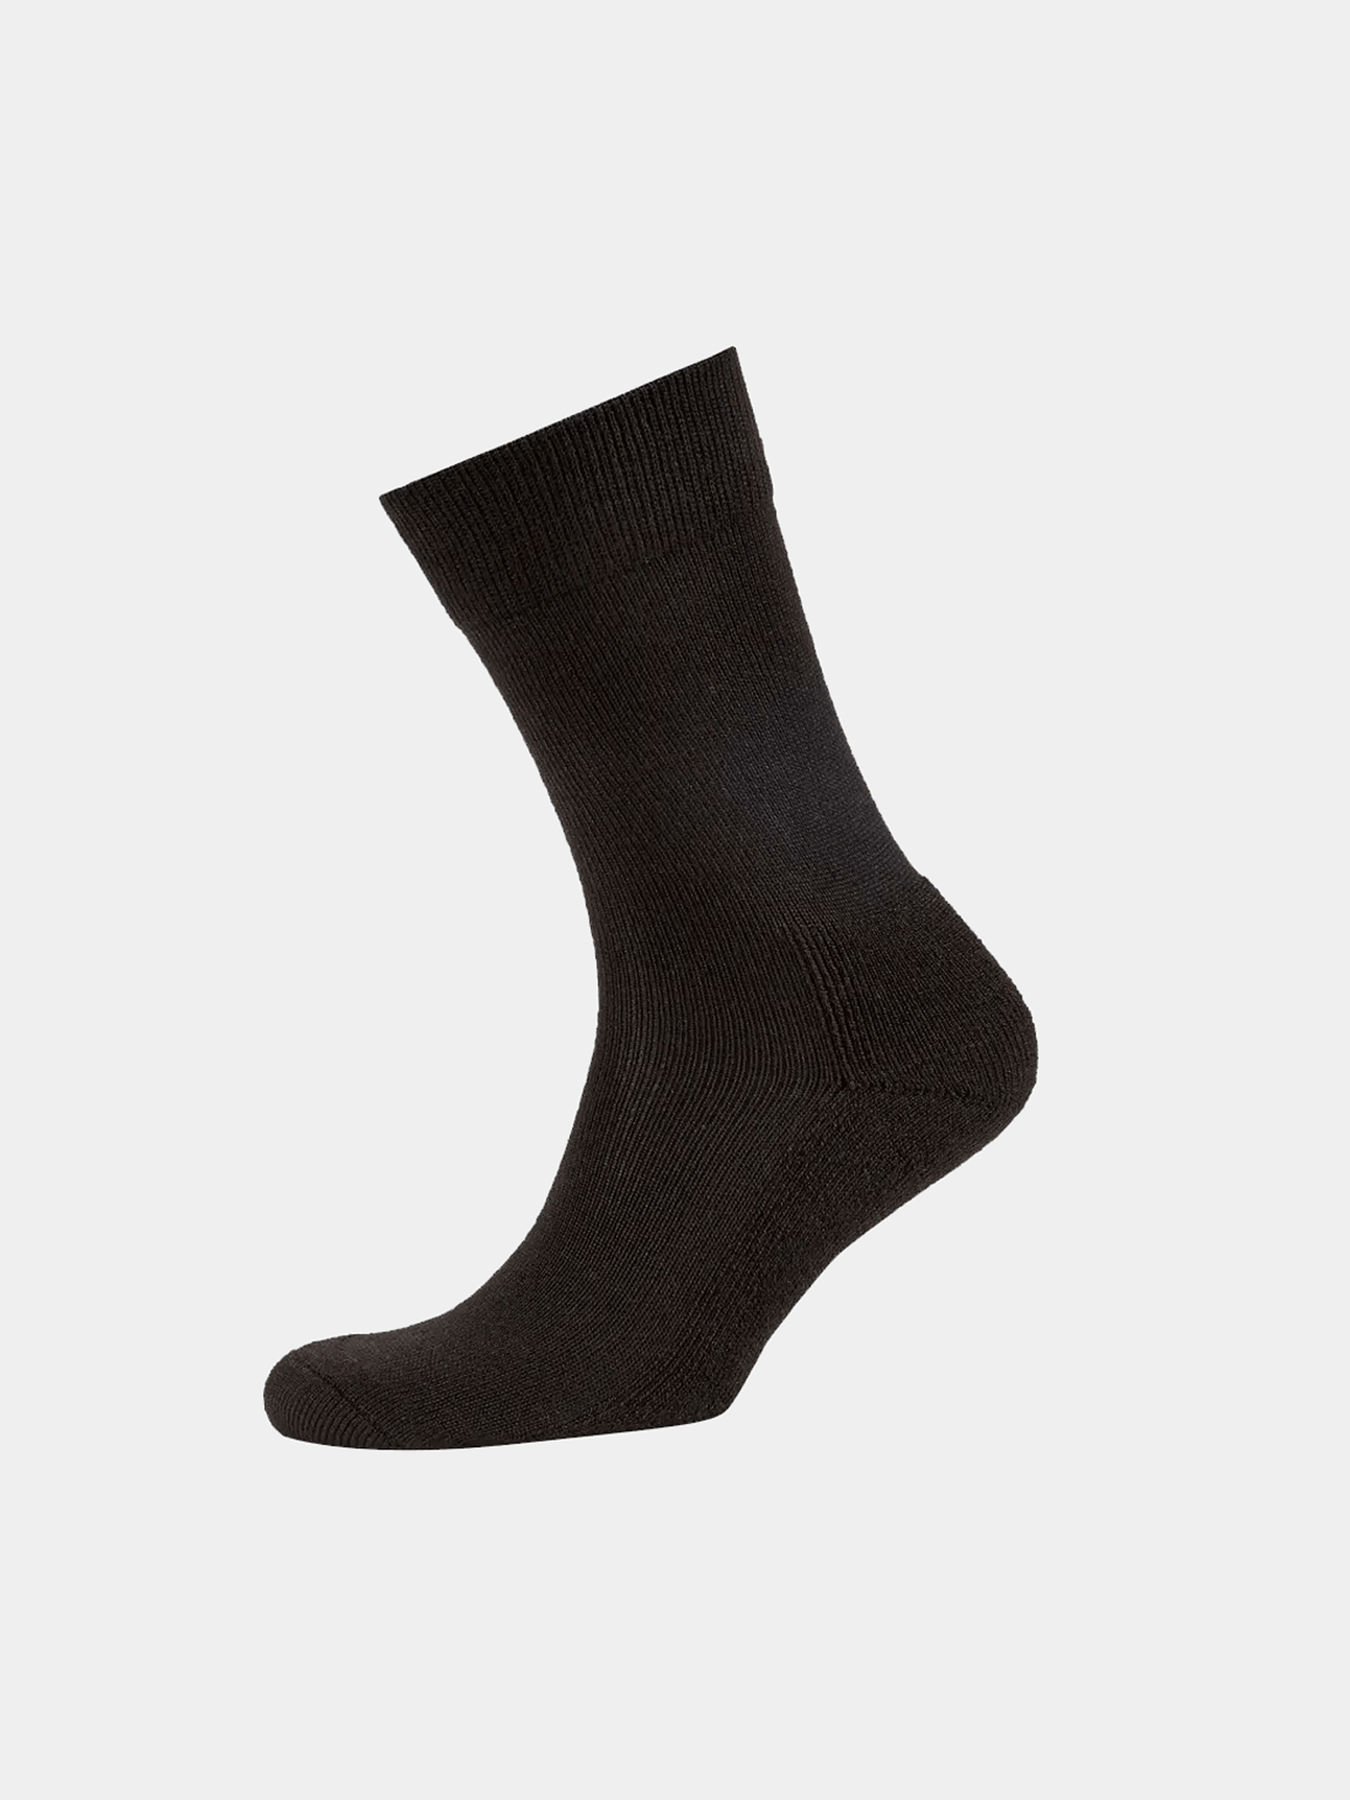 StayDry 100% Waterproof Socks